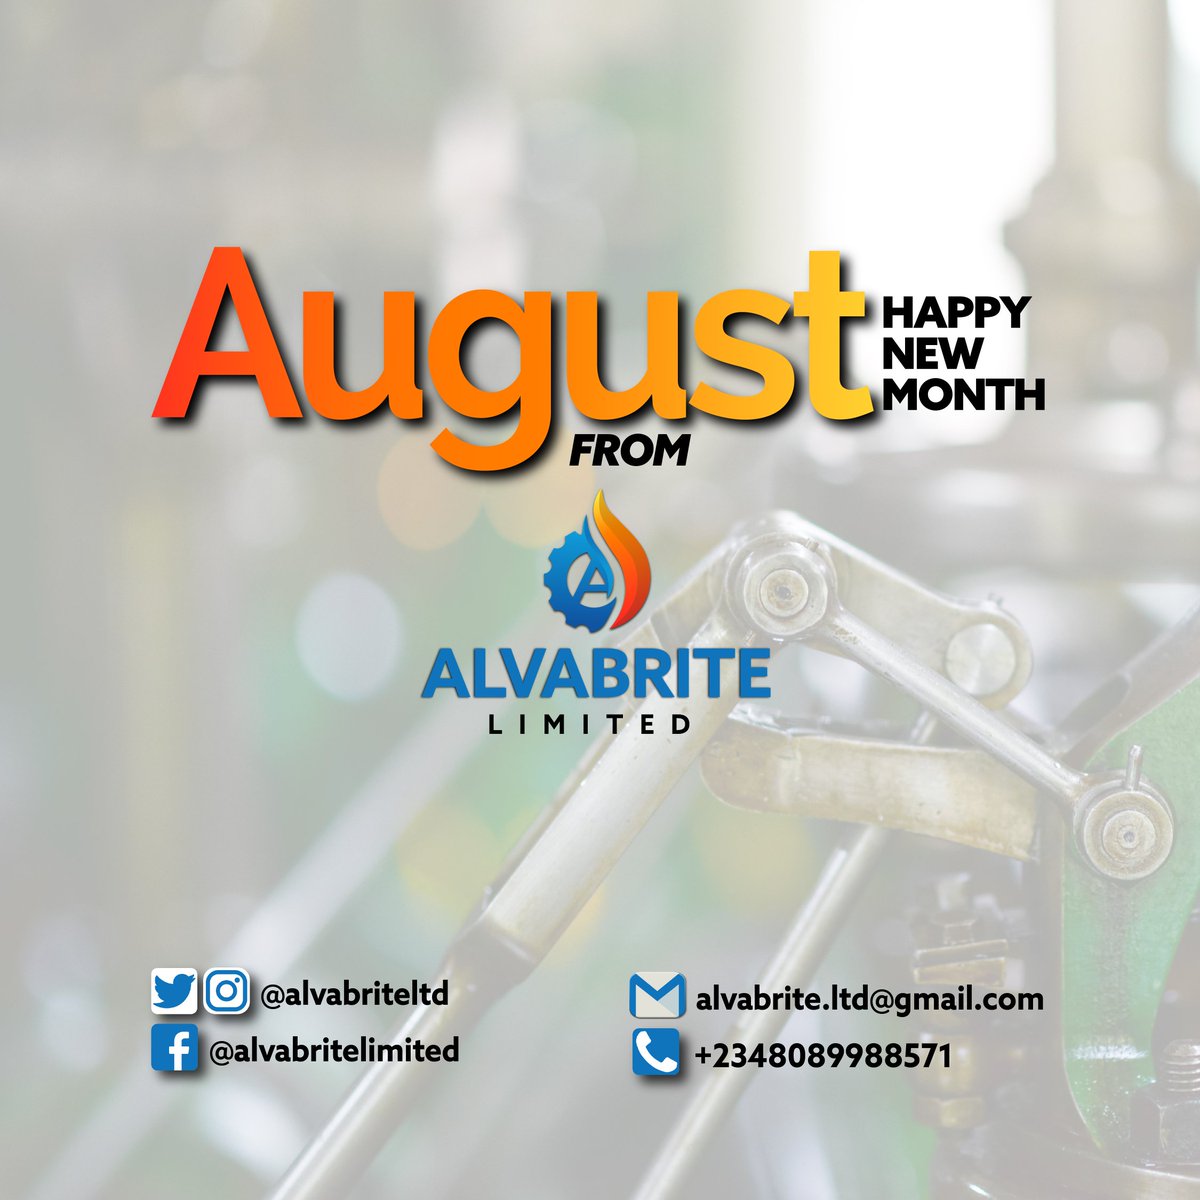 Welcome to the month of August! 

#NigeriaOilandGas #OilandGas #OilCompaniesinNigeria #EngineeringConsulting #OilandGasConsulting #NigeriaOilandGasIndustry #NigeriaCrudeOil #NigeriaProductionCompany #NigeriaManufacturing #PipelineConsulting #CorrosionControl #STEM